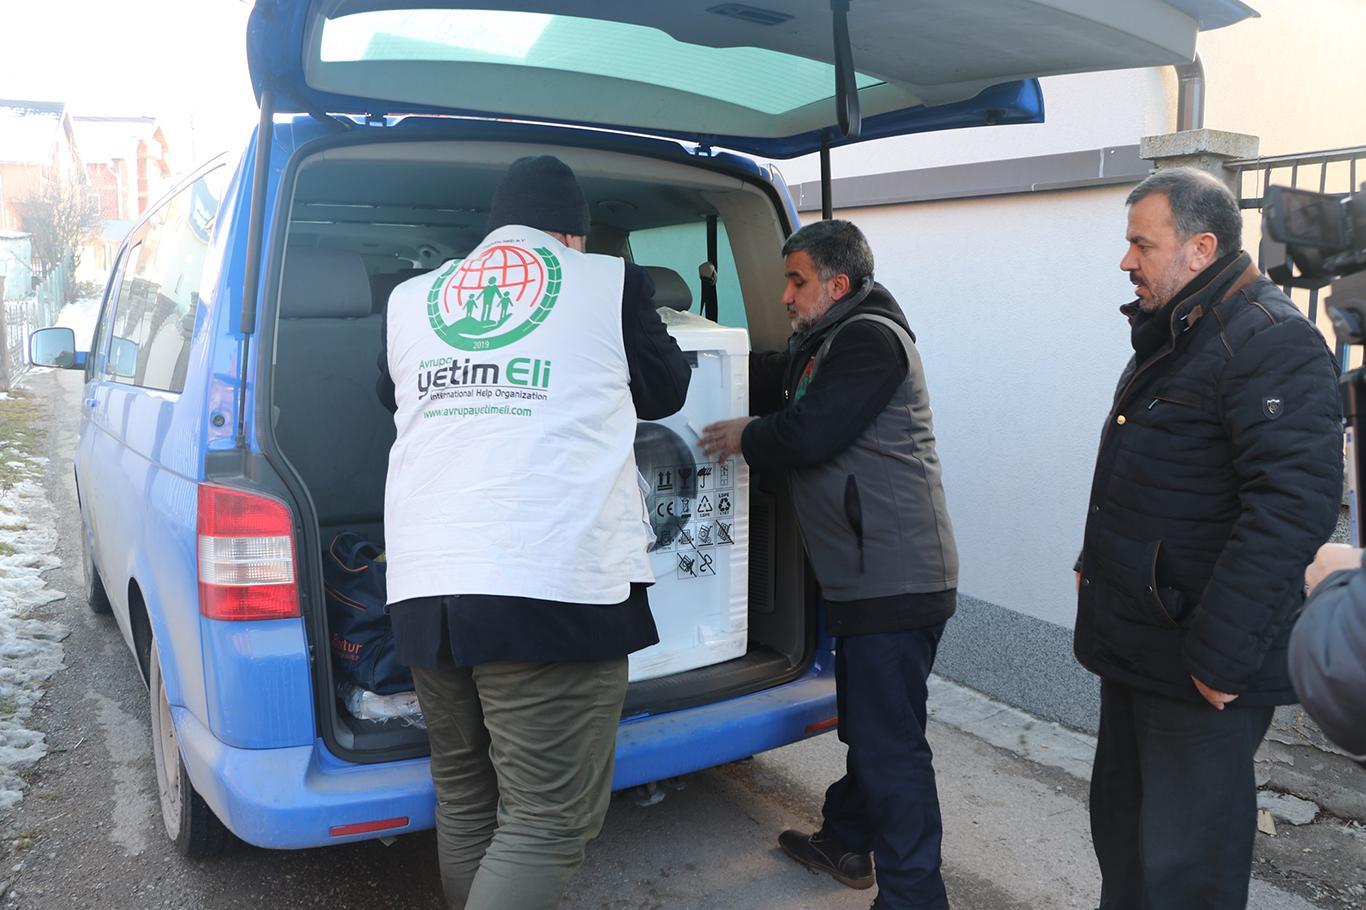 The European Yetim Eli distributes aids in the Balkans